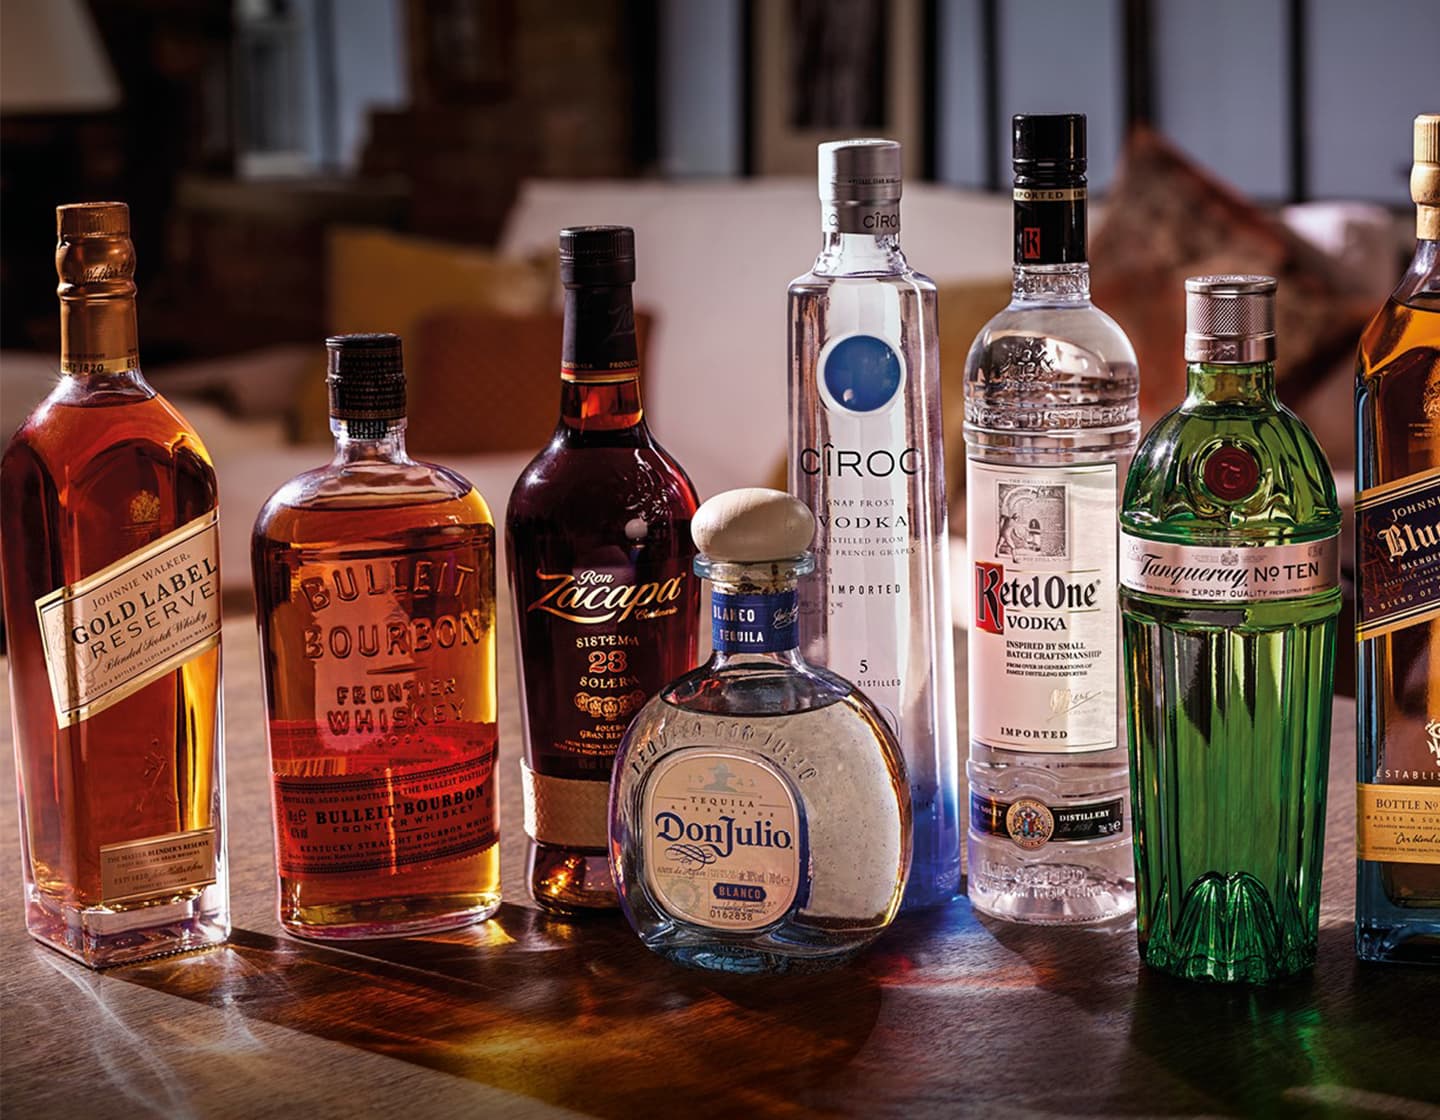 Un grupo de botellas de alcohol, de izquierda a derecha, Johnnie Walker Gold Label Reserve, Bulleit Bourbon, Zacapa, Don Julio, Cîroc, Ketel One, Tanqueray No Ten y Johnnie Walker Blue Label.